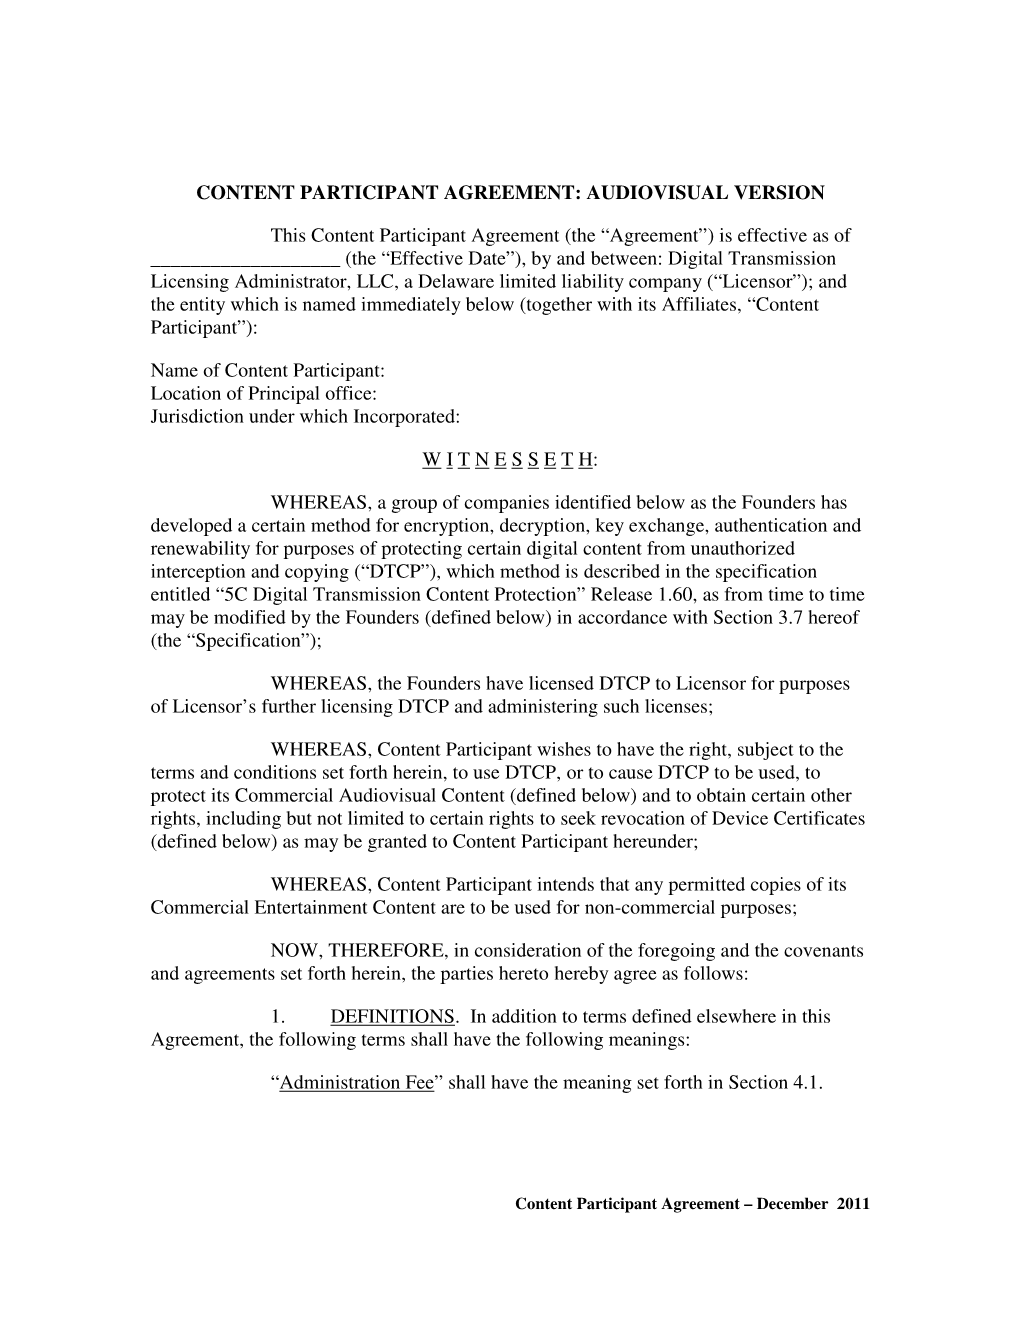 Content Participant Agreement: Audiovisual Version